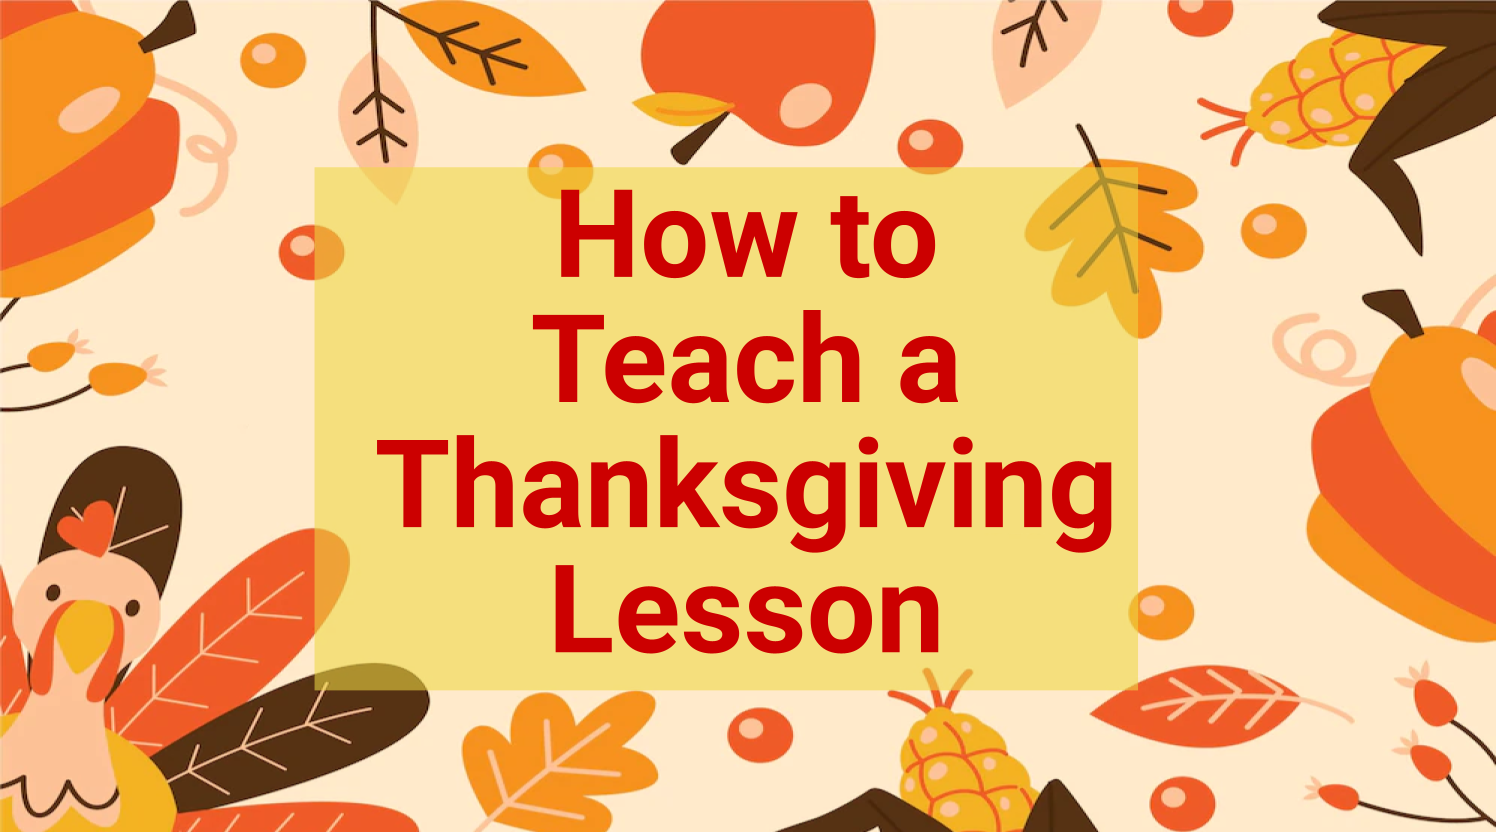 How to Teach a Thanksgiving Lesson